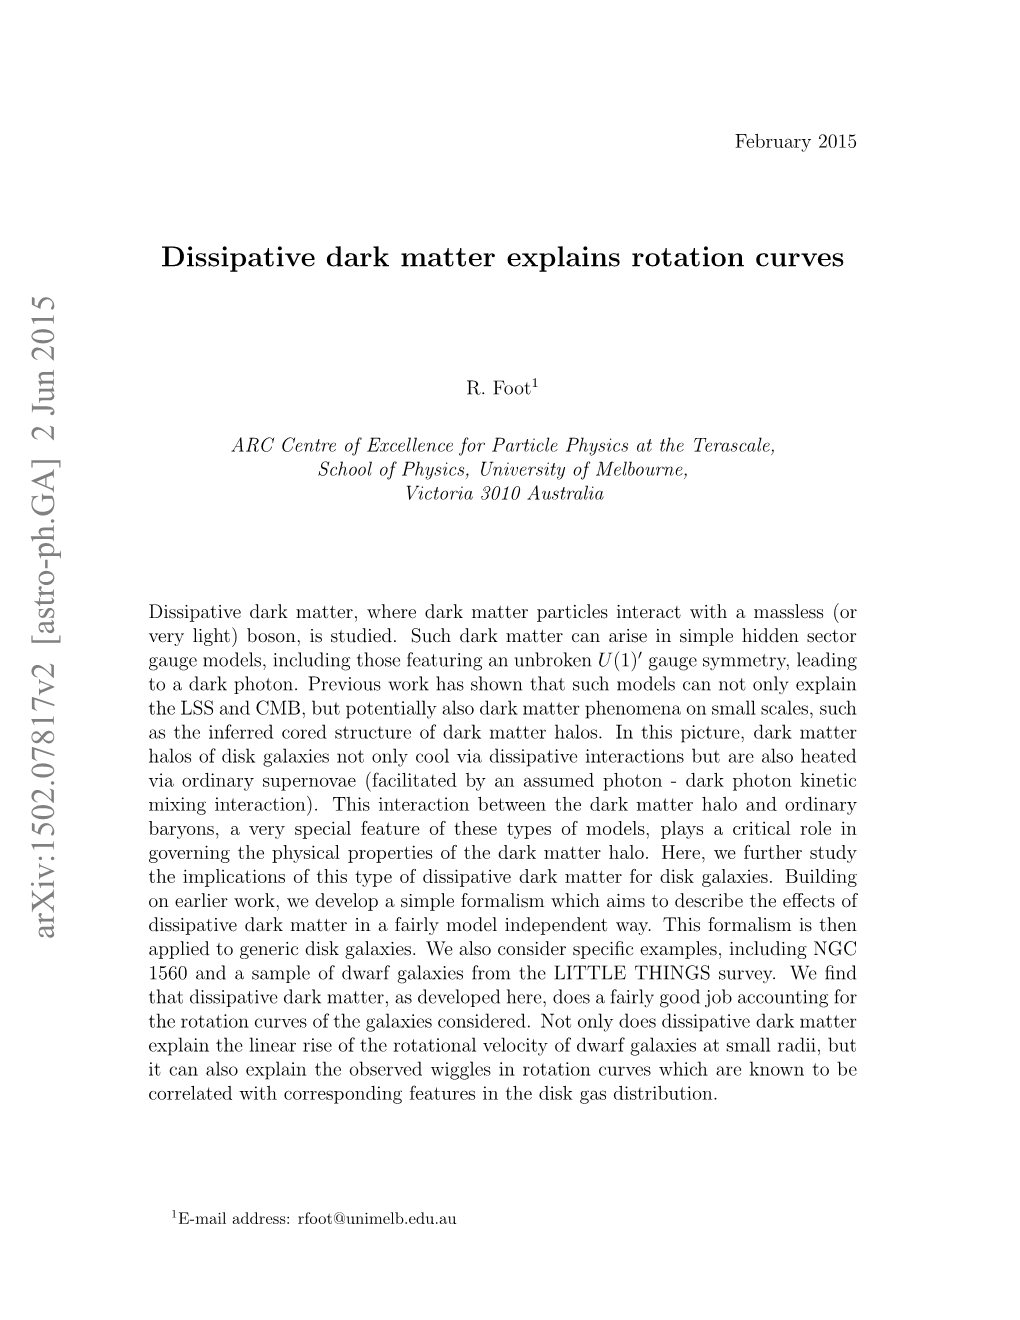 Dissipative Dark Matter Explains Rotation Curves